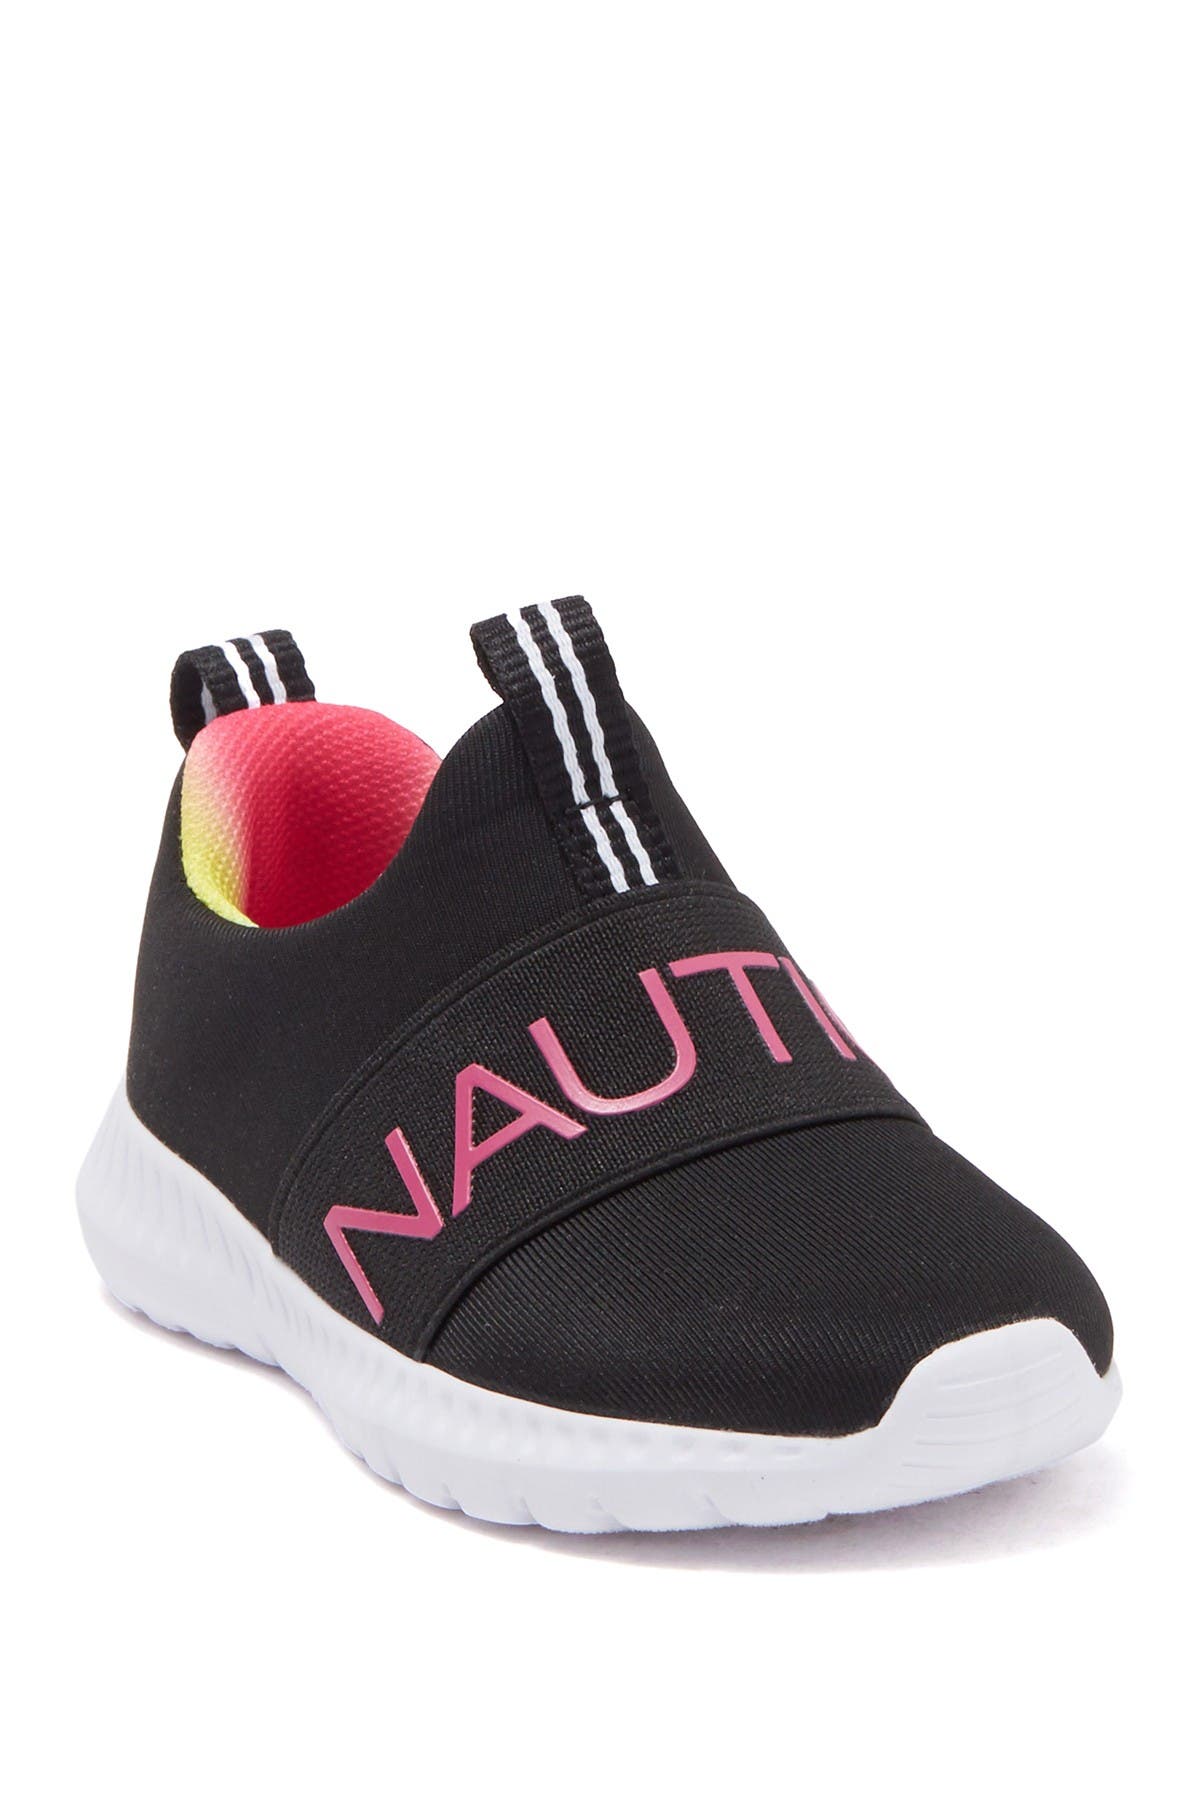 nautica pink slip on sneakers